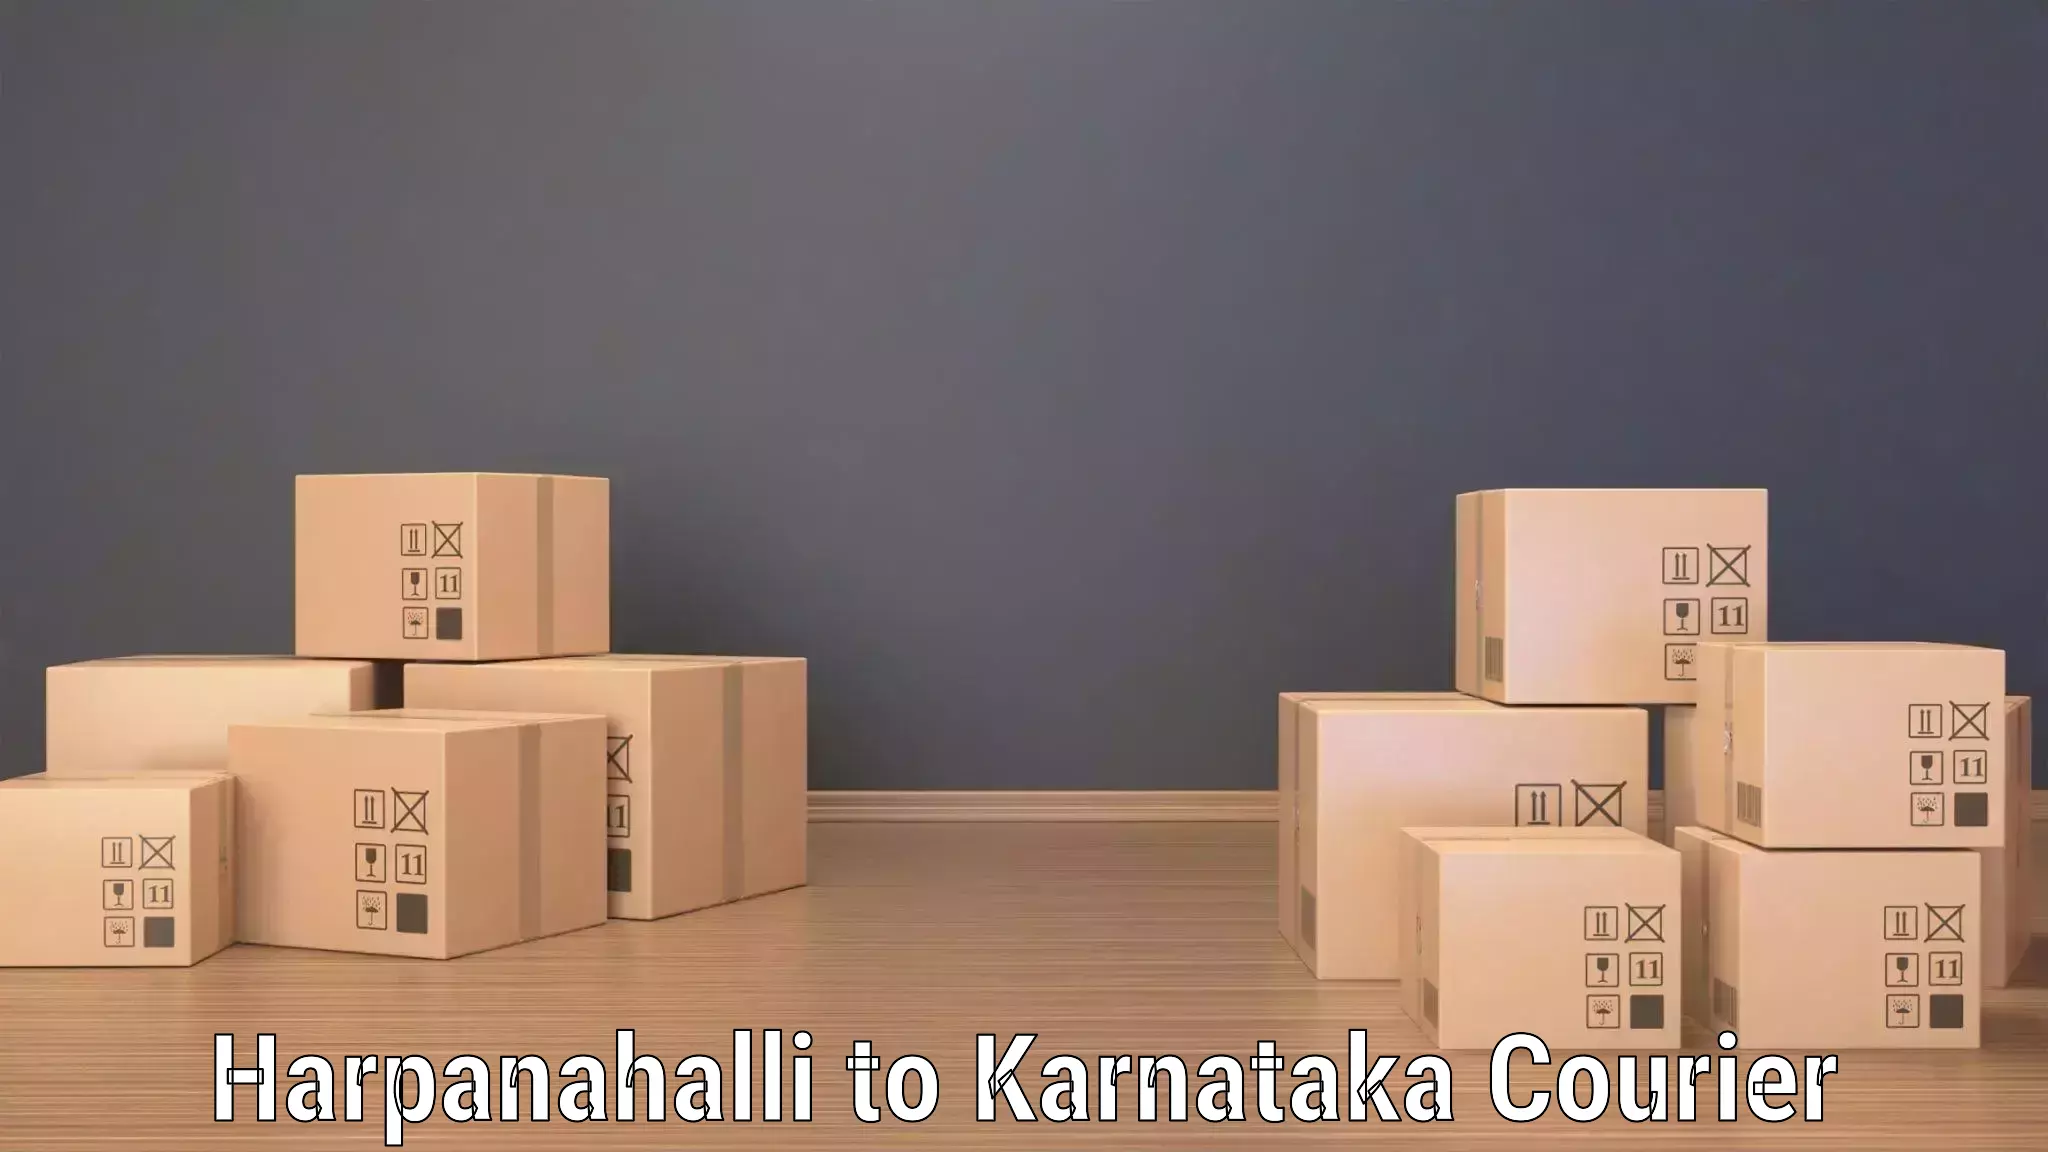 Same-day delivery solutions Harpanahalli to Chintamani Kolar